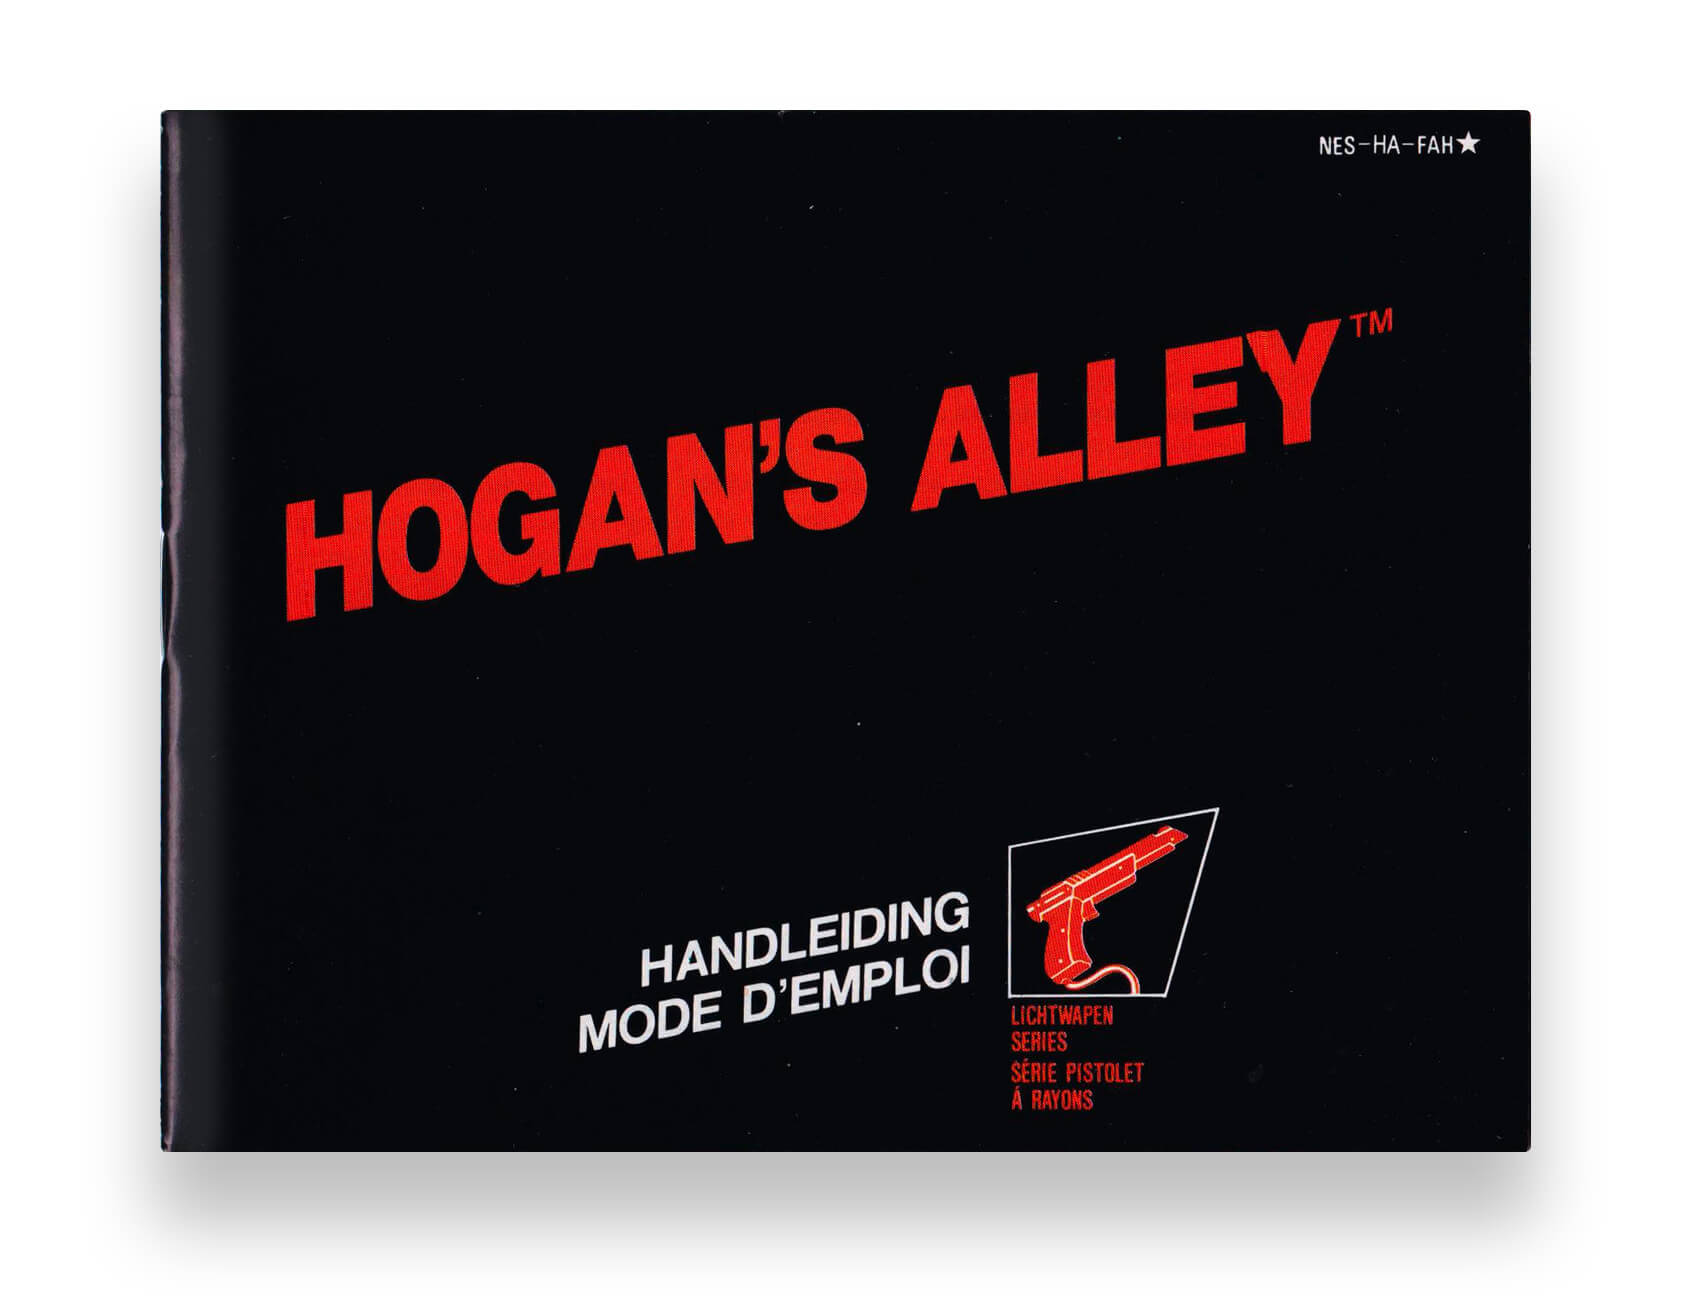 Hogan’s Alley